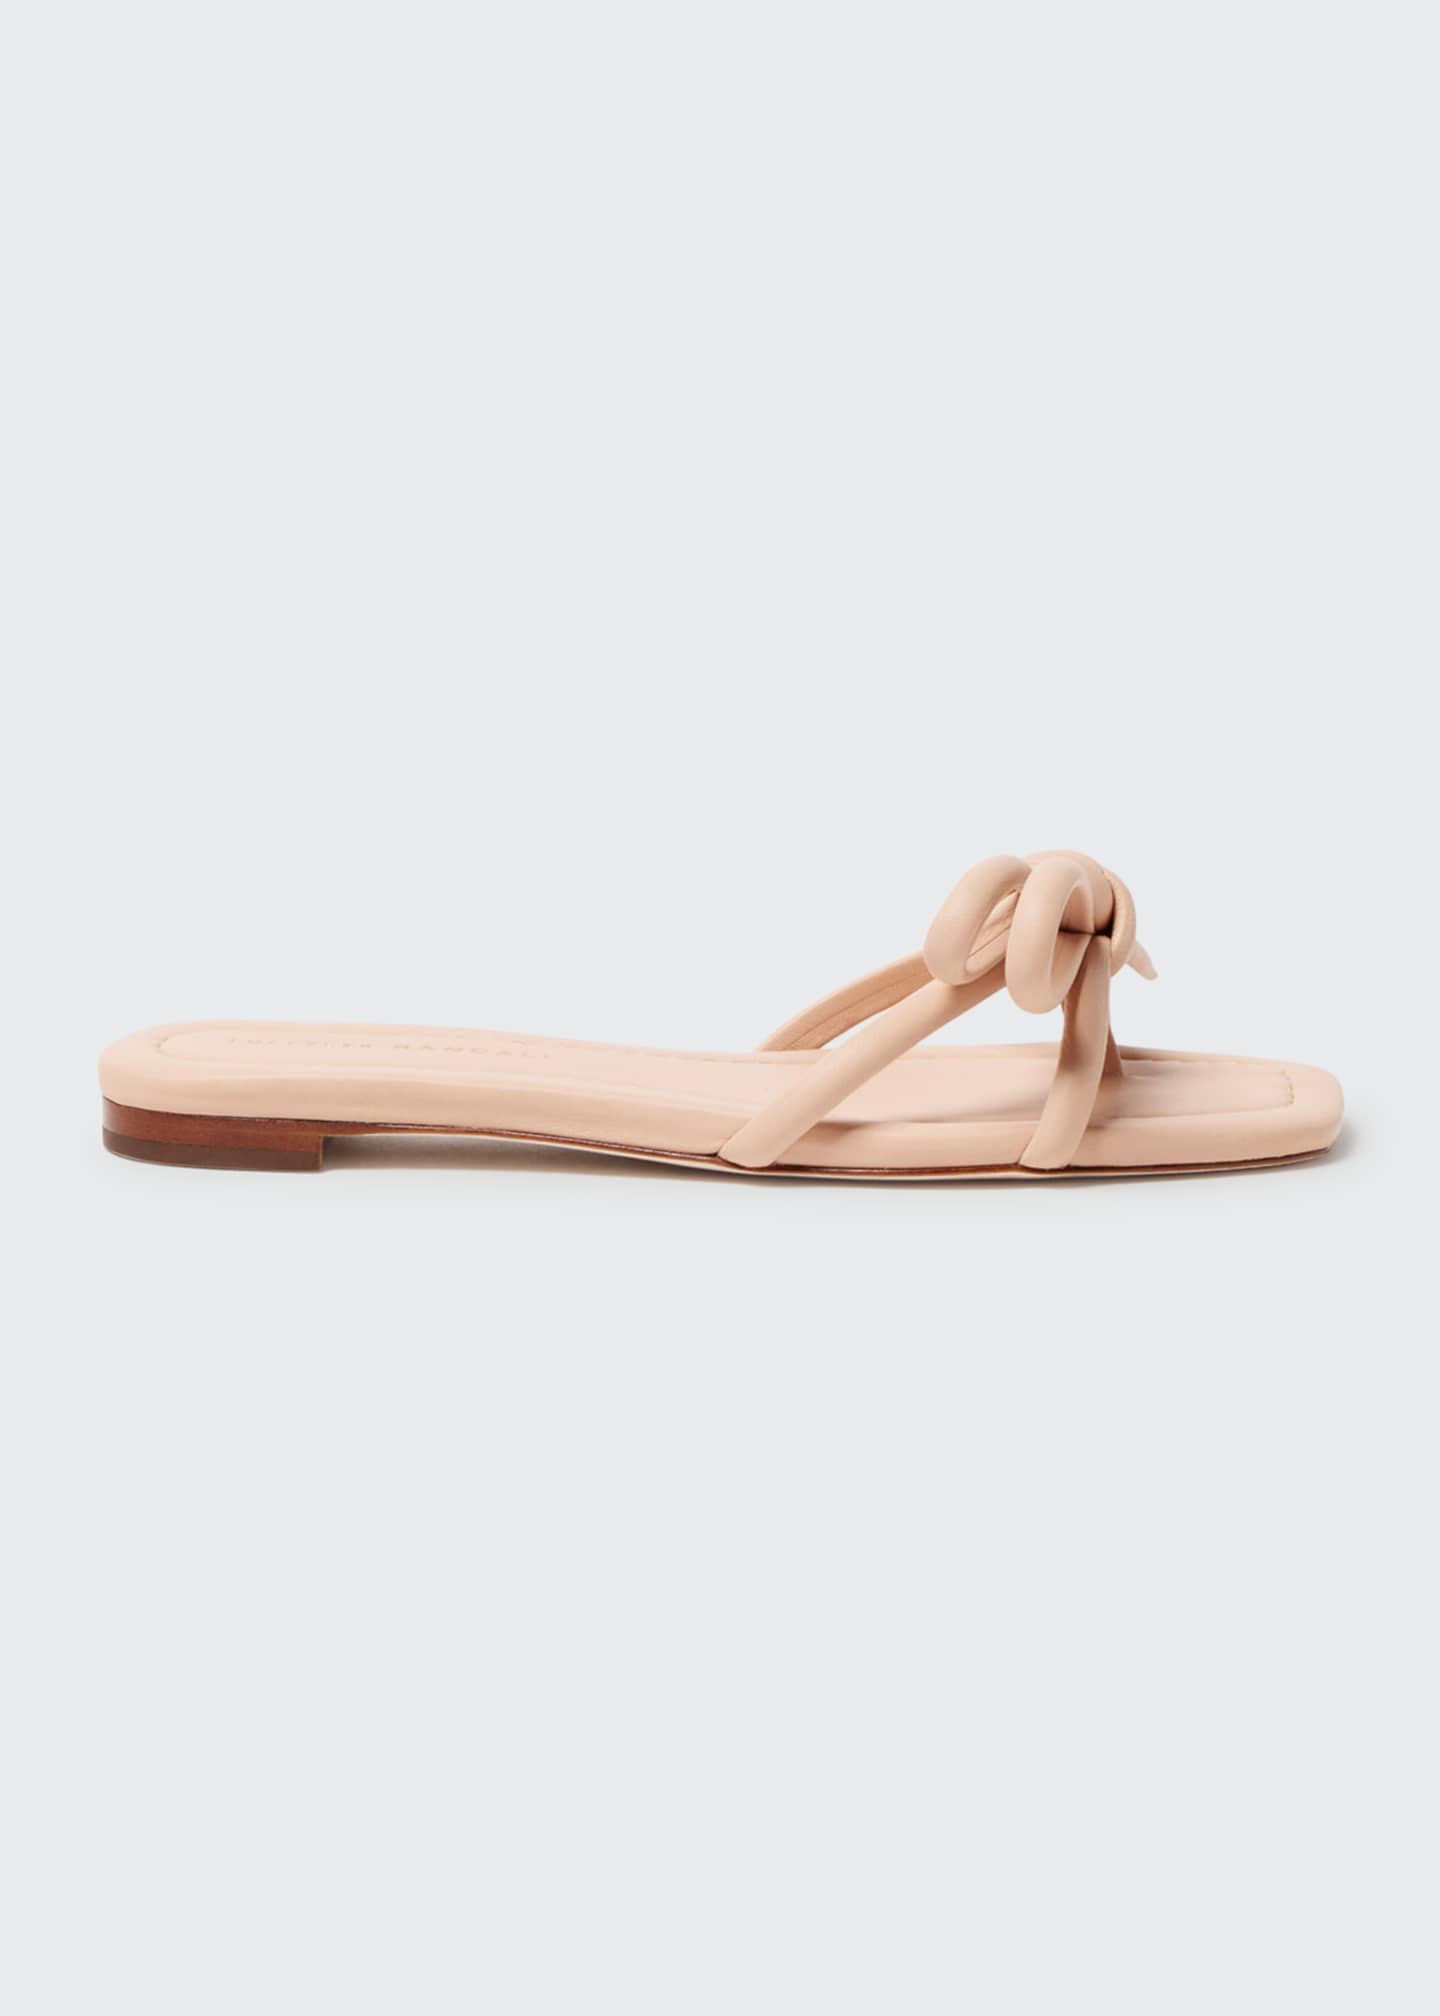 Loeffler Randall Leather Bow Flat Sandals | Bergdorf Goodman